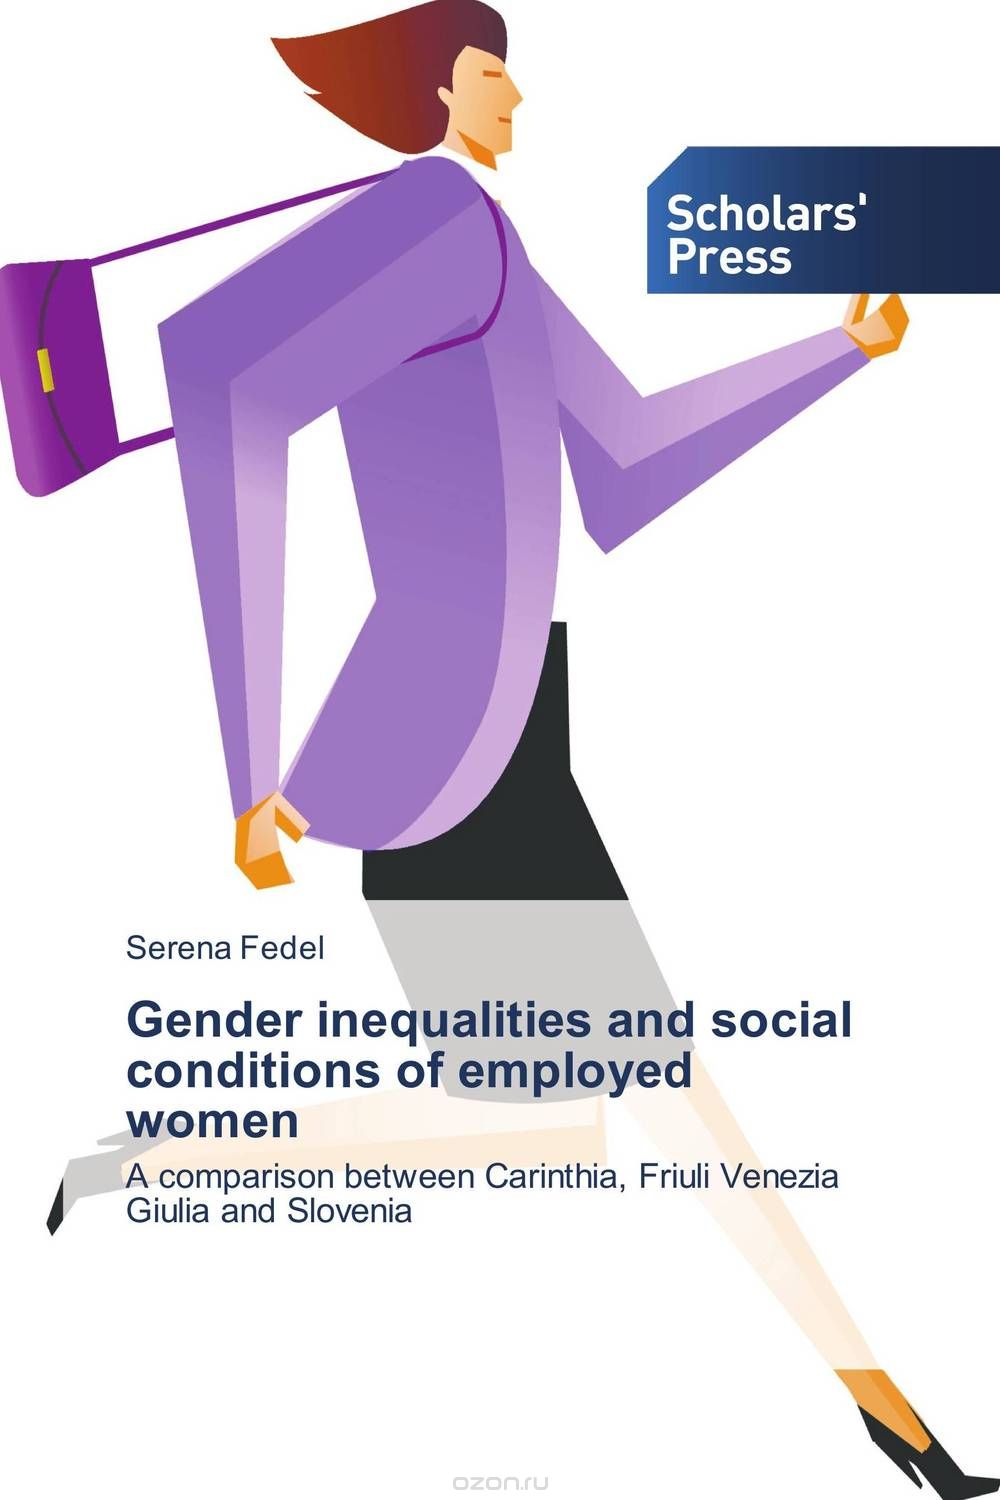 Скачать книгу "Gender inequalities and social conditions of employed women"